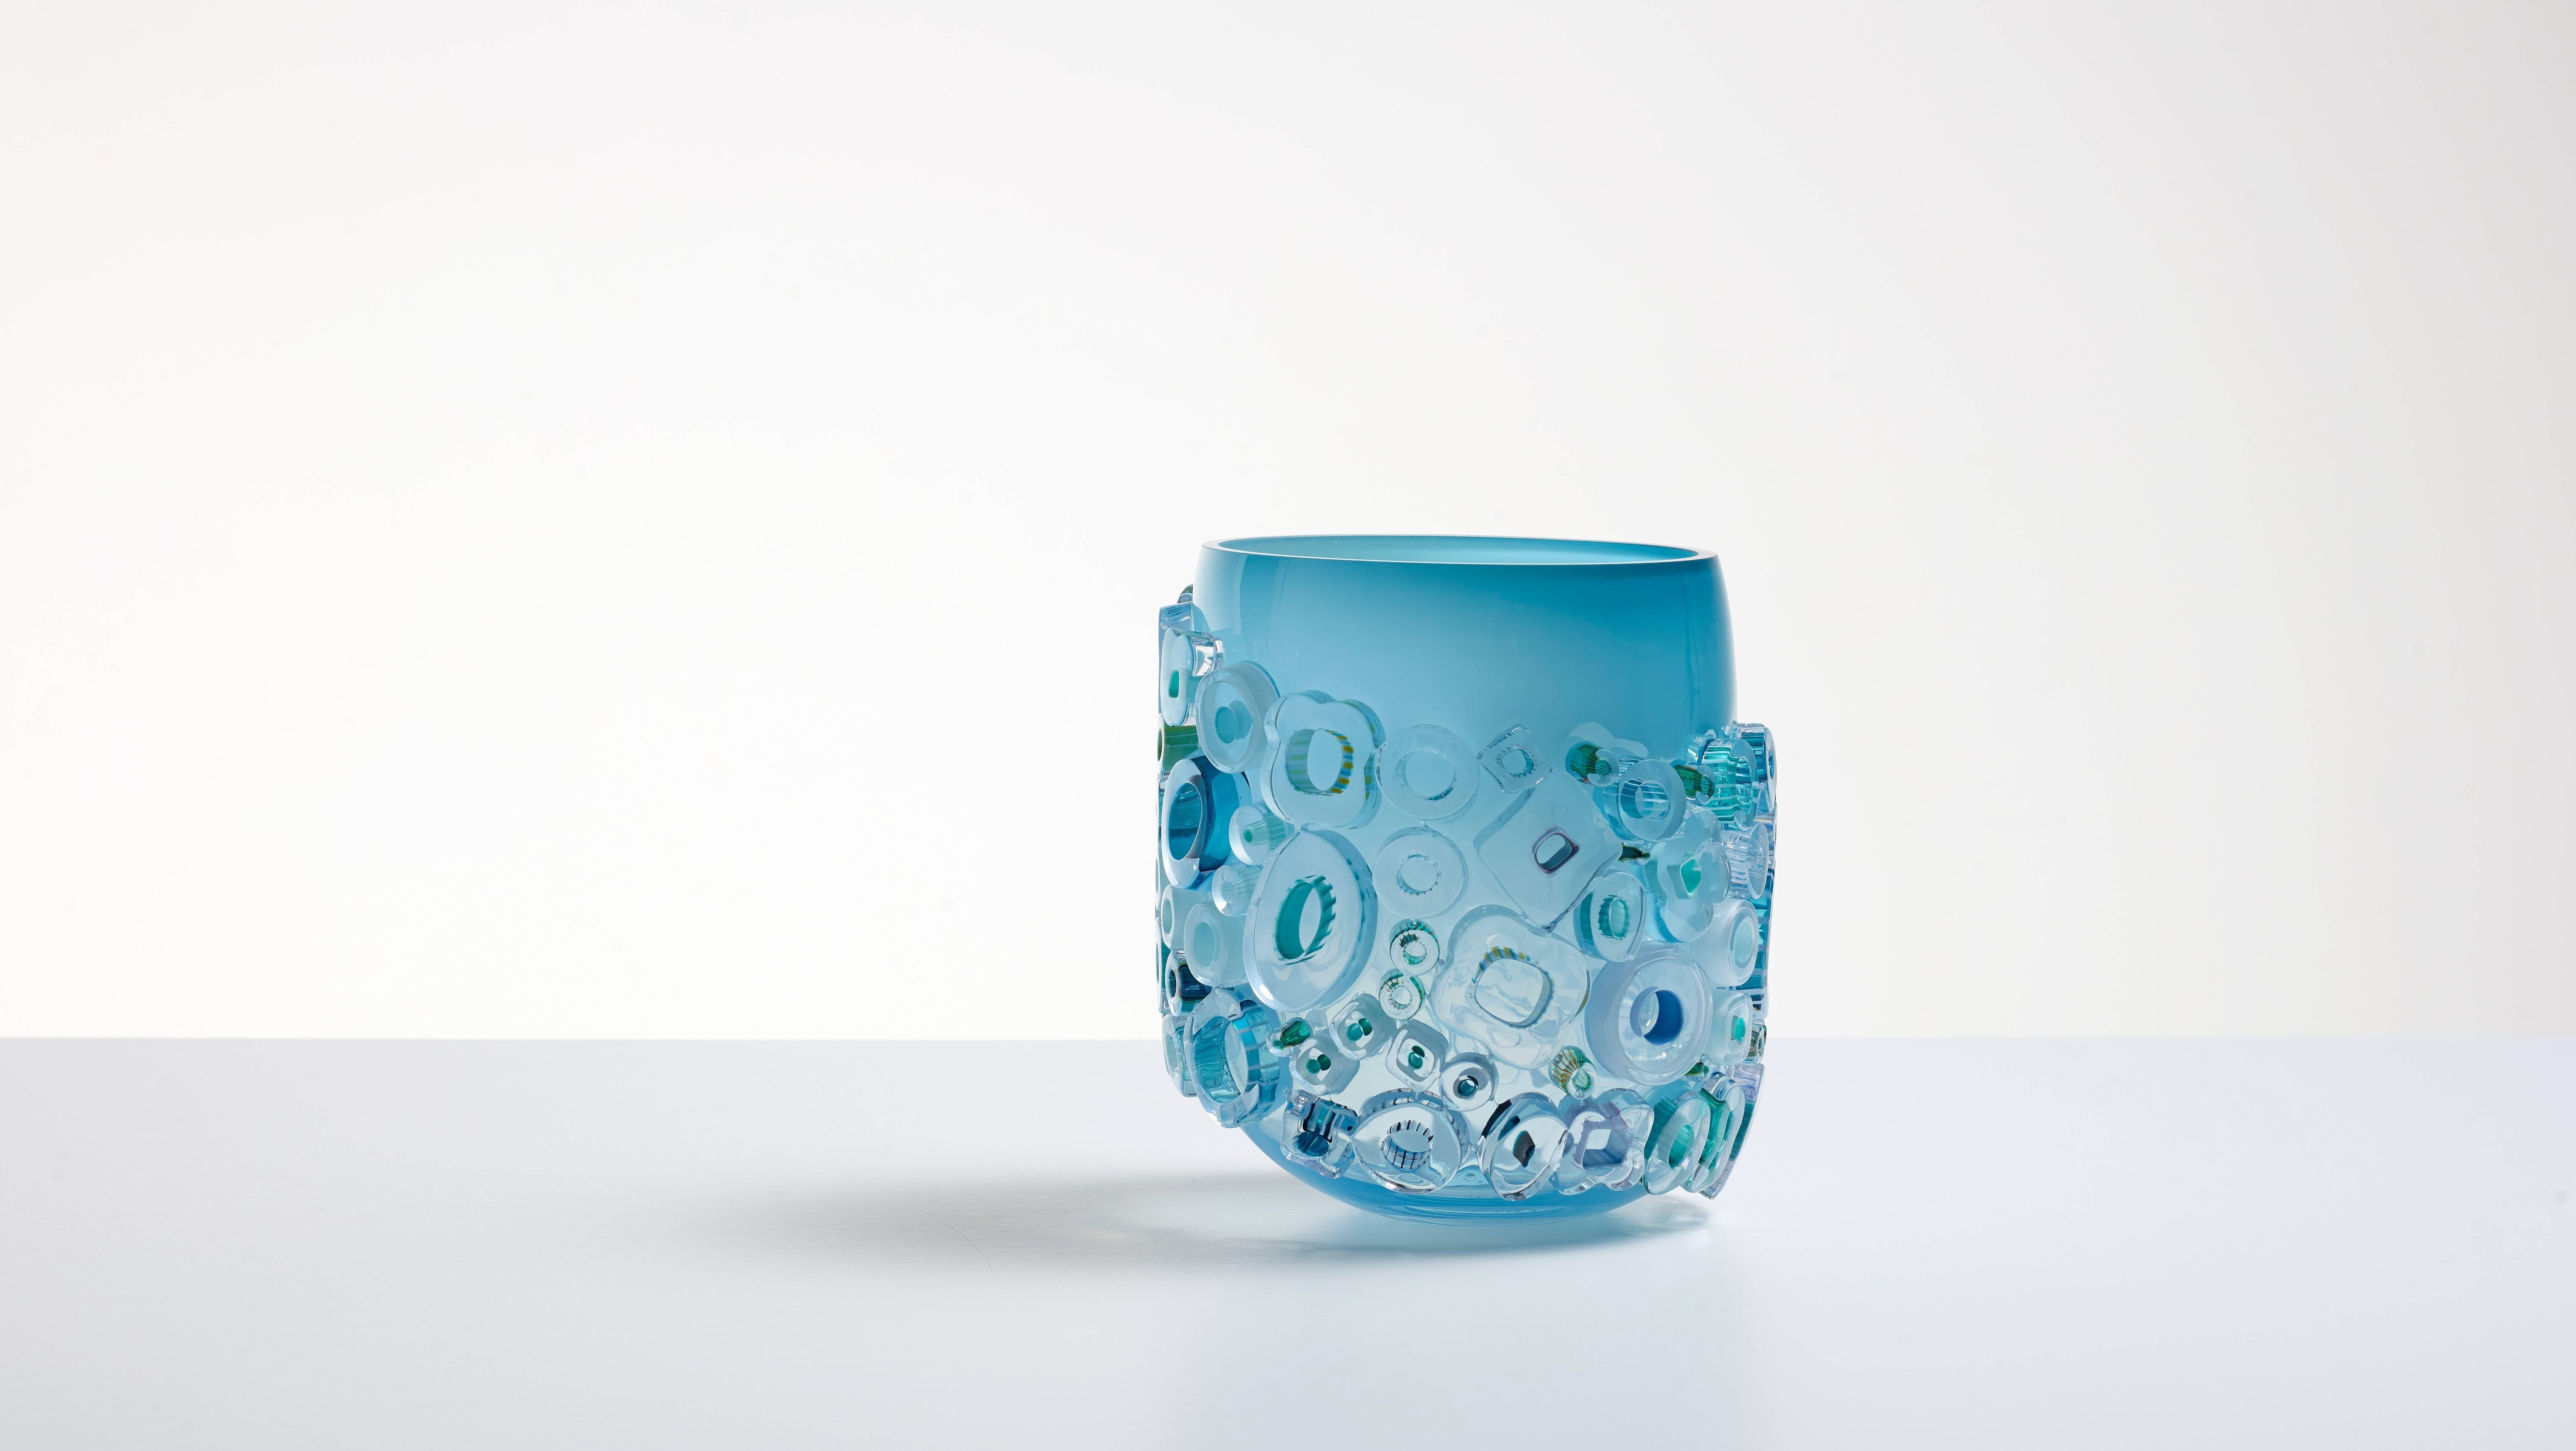 Murano glass style blue vase. Blue blown glass vessel with glass ornaments - Modern Sculpture by Sabine Lintzen